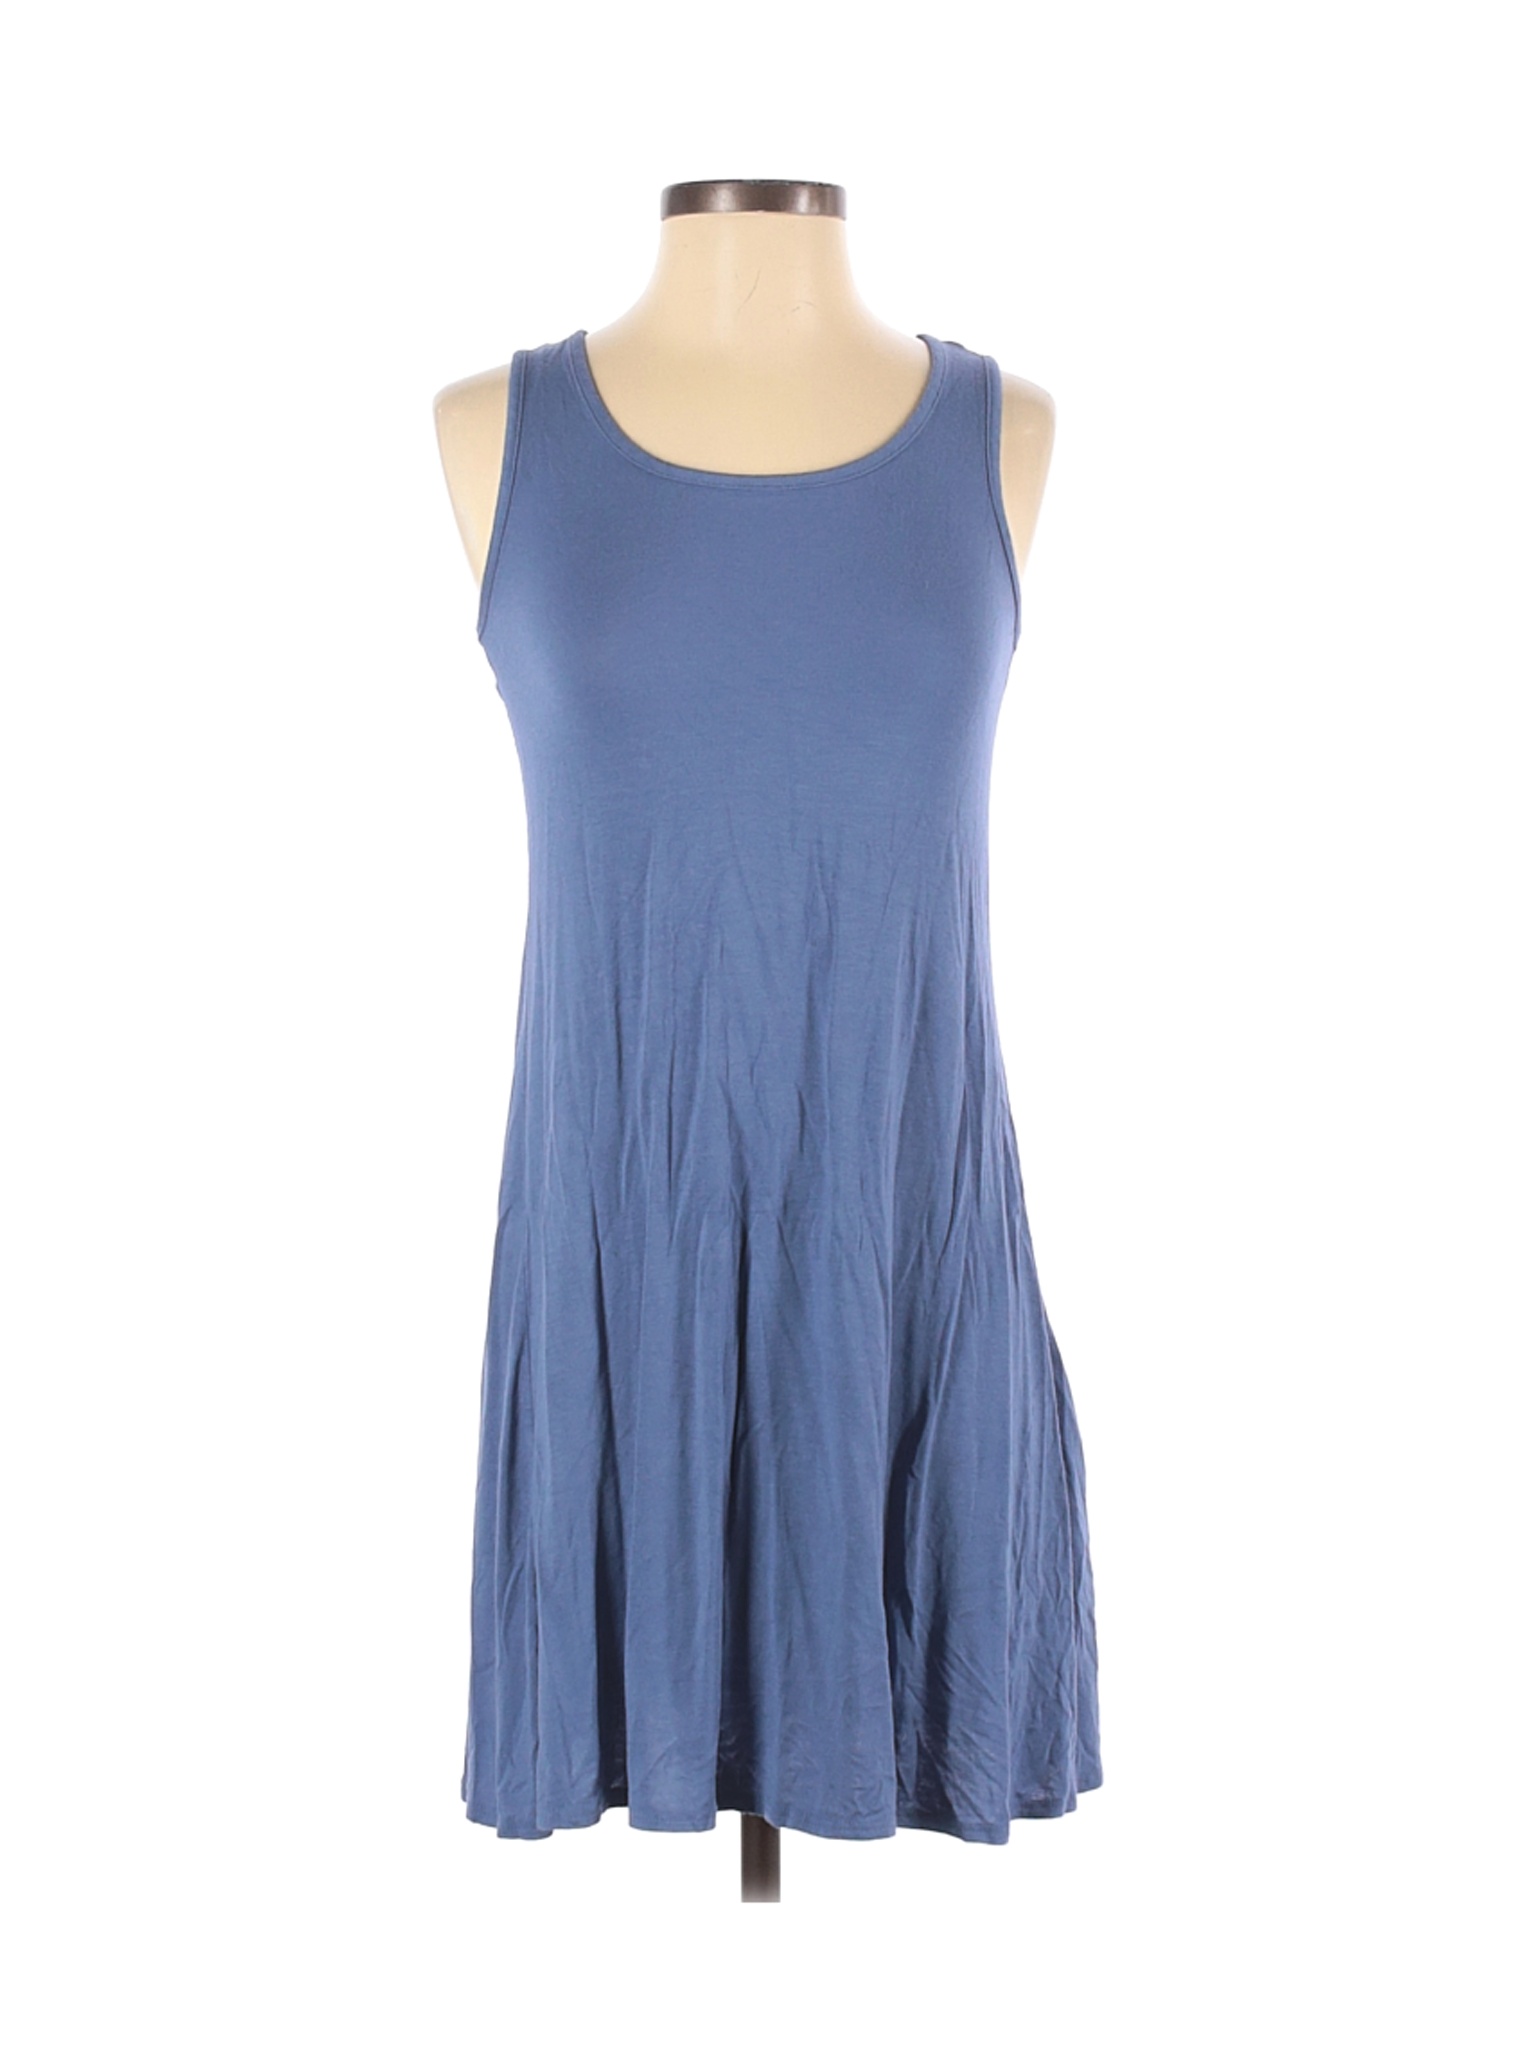 Olivia Rae Women Blue Casual Dress S | eBay